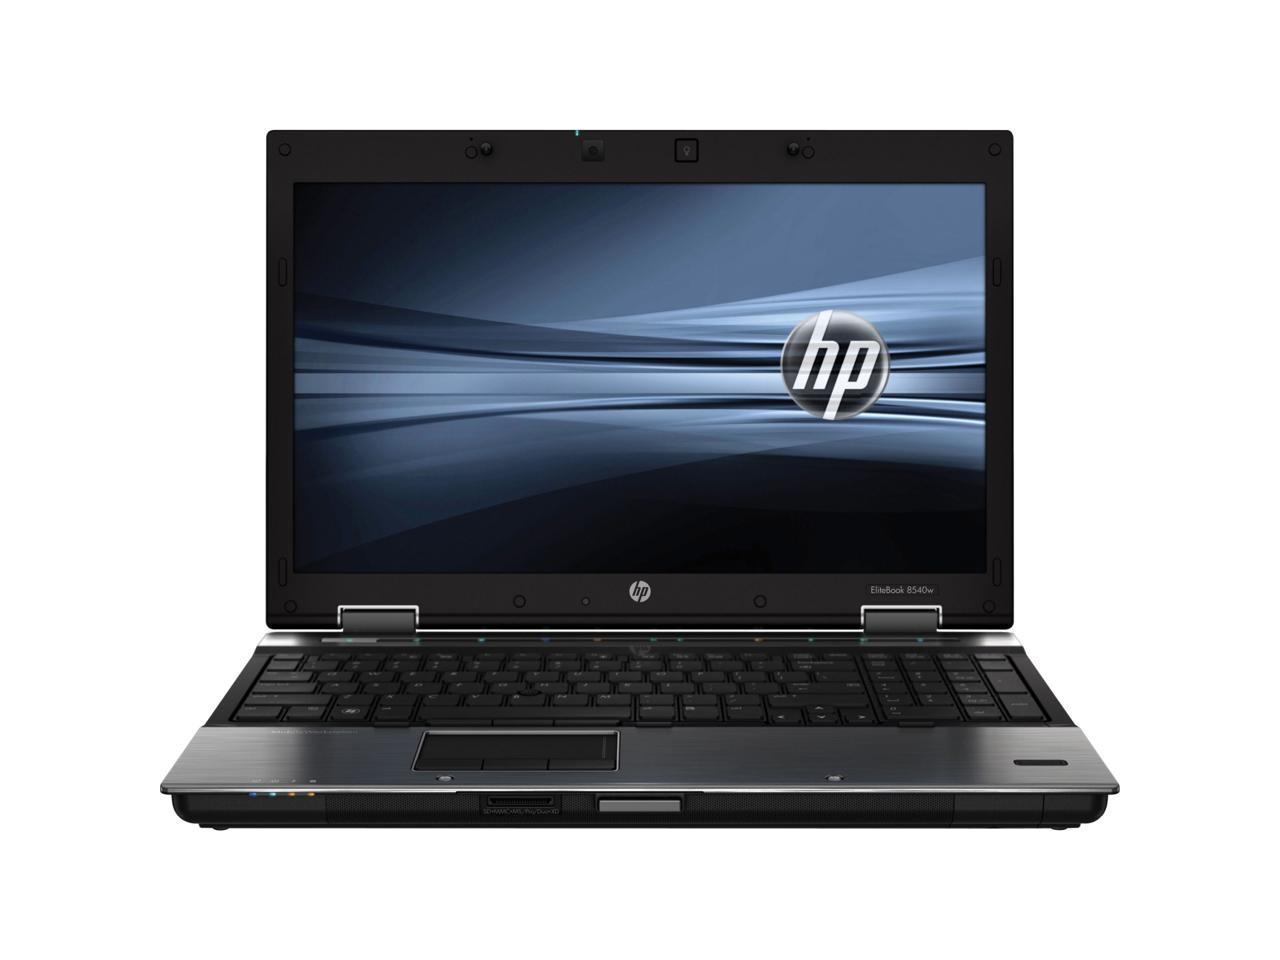 HP EliteBook 8540w BW706US 15.6" LED Notebook - Core i7 i7-840QM 1